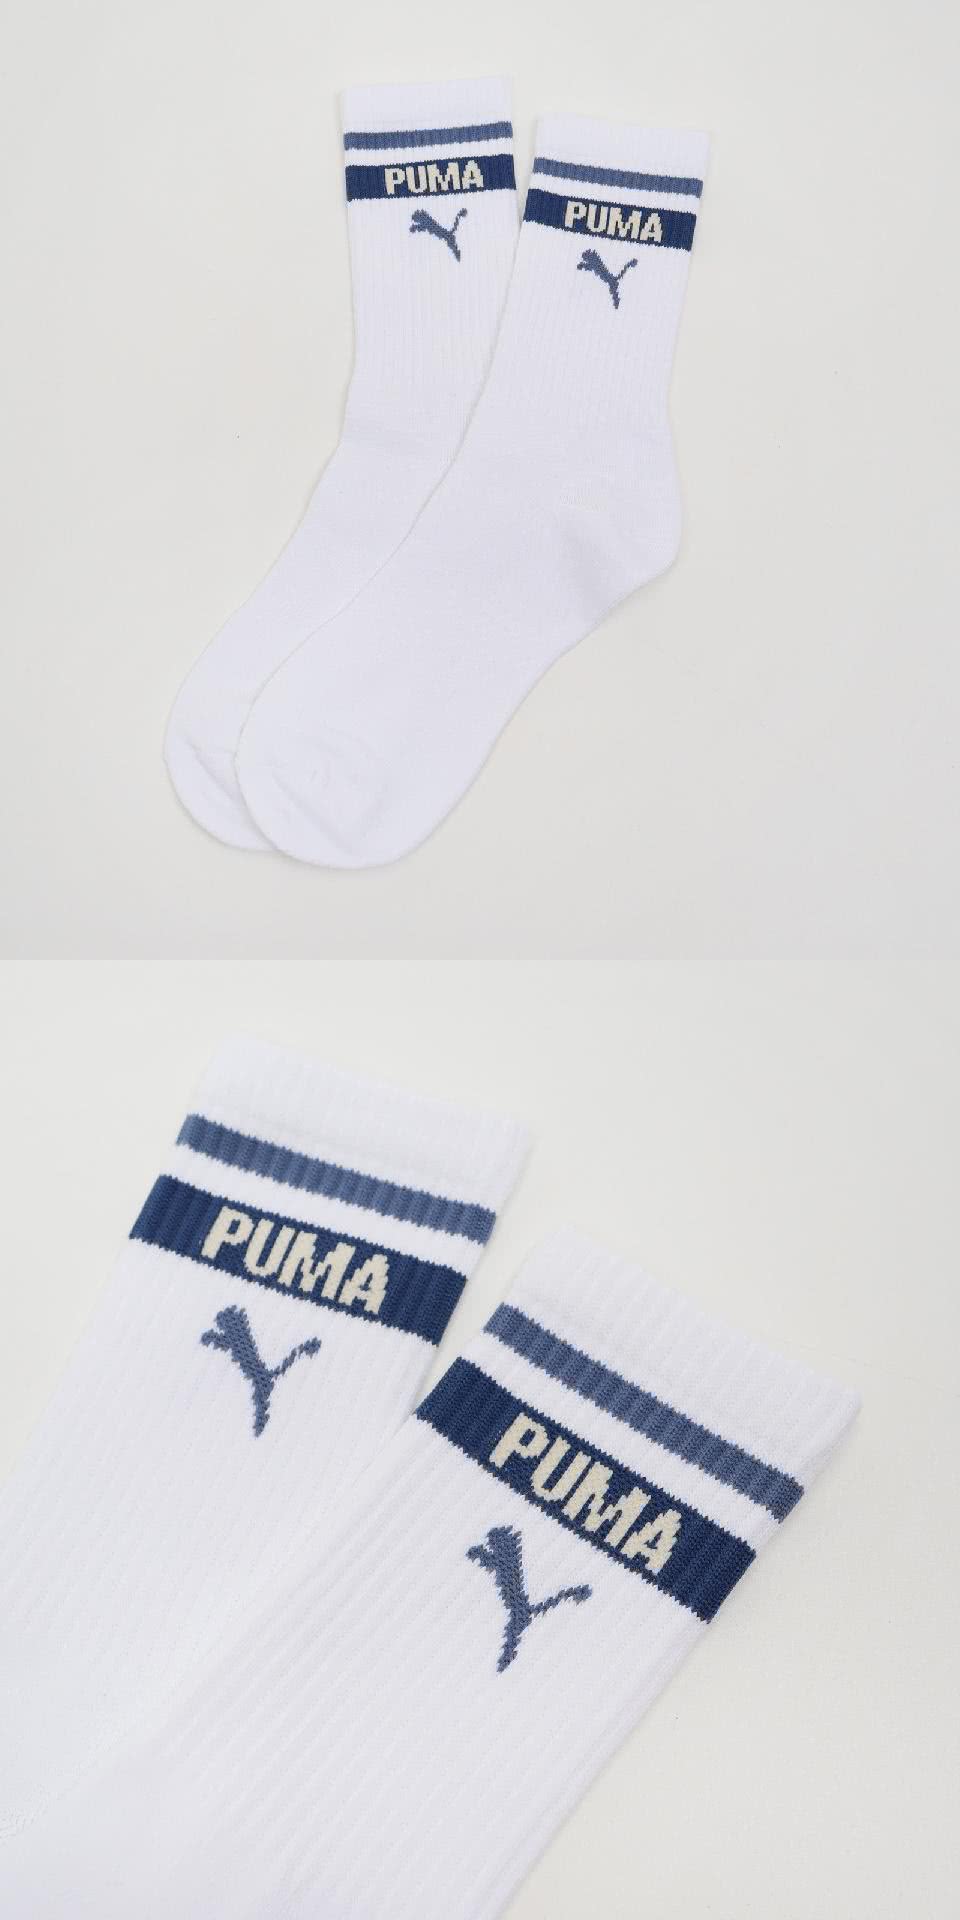 PUMA 襪子 Fashion Crew Socks 白 藍